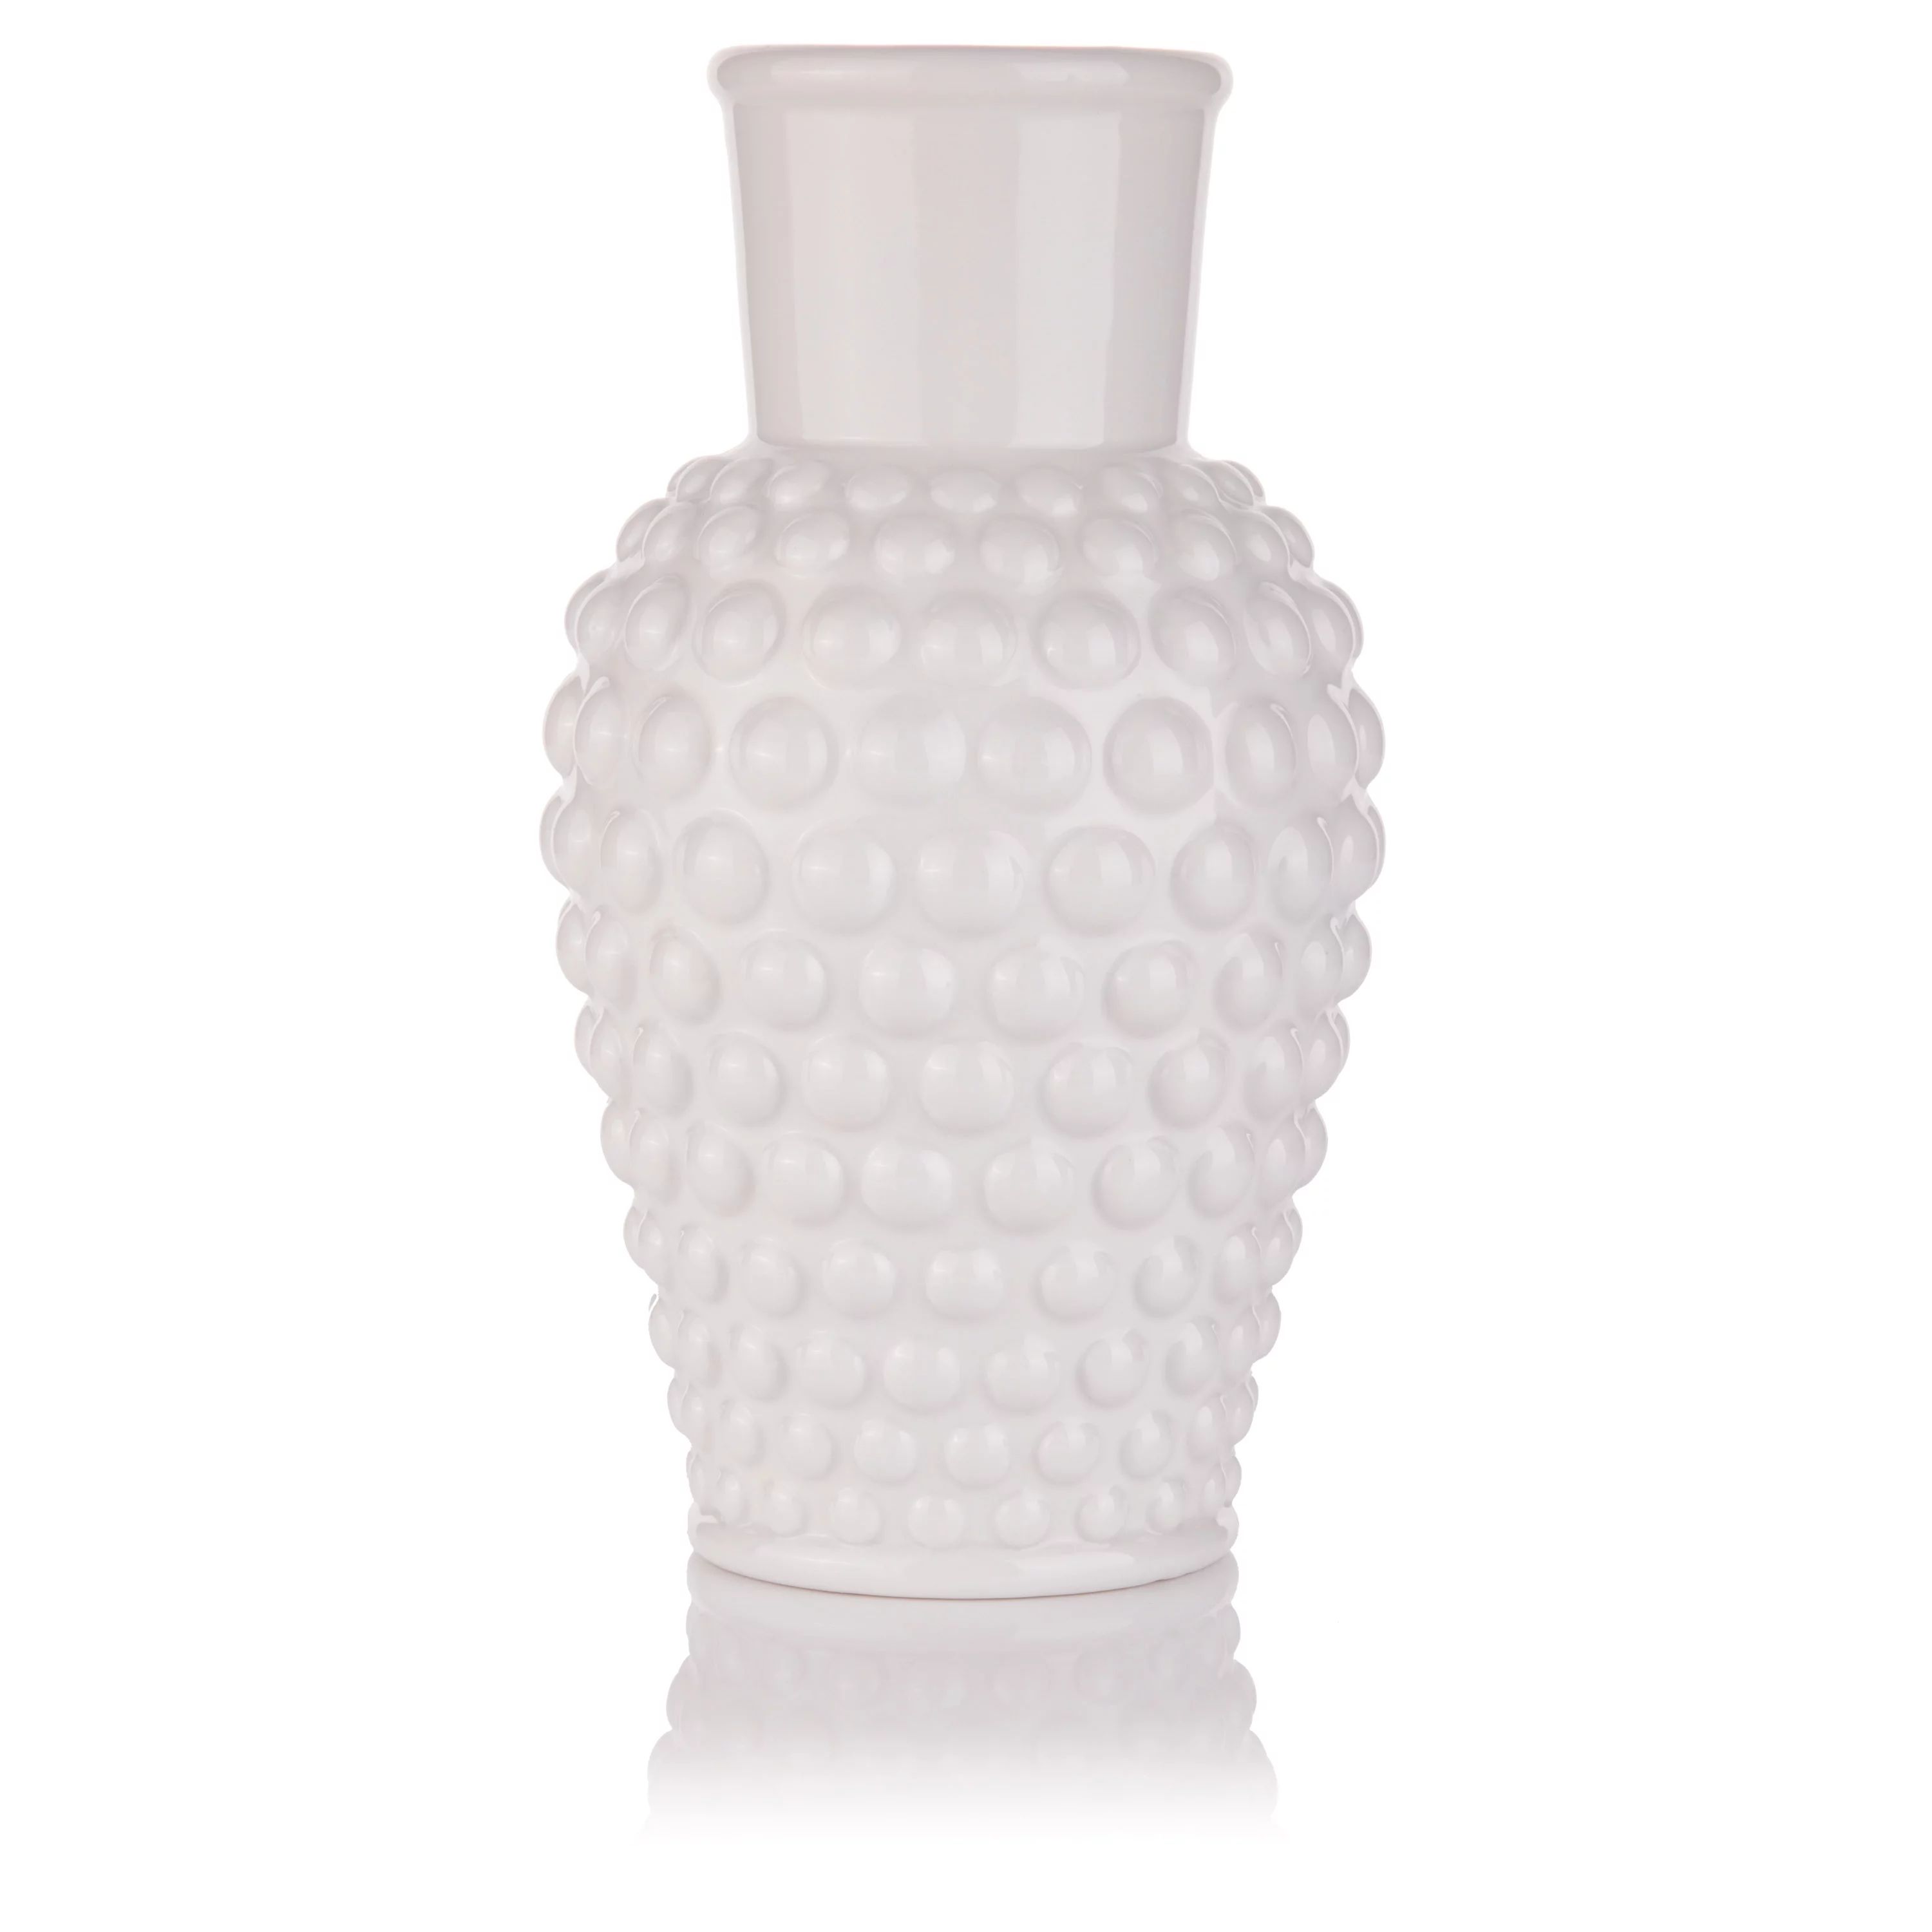 My Texas House Glass Hobnail Vase, 10" Tall, White | Walmart (US)